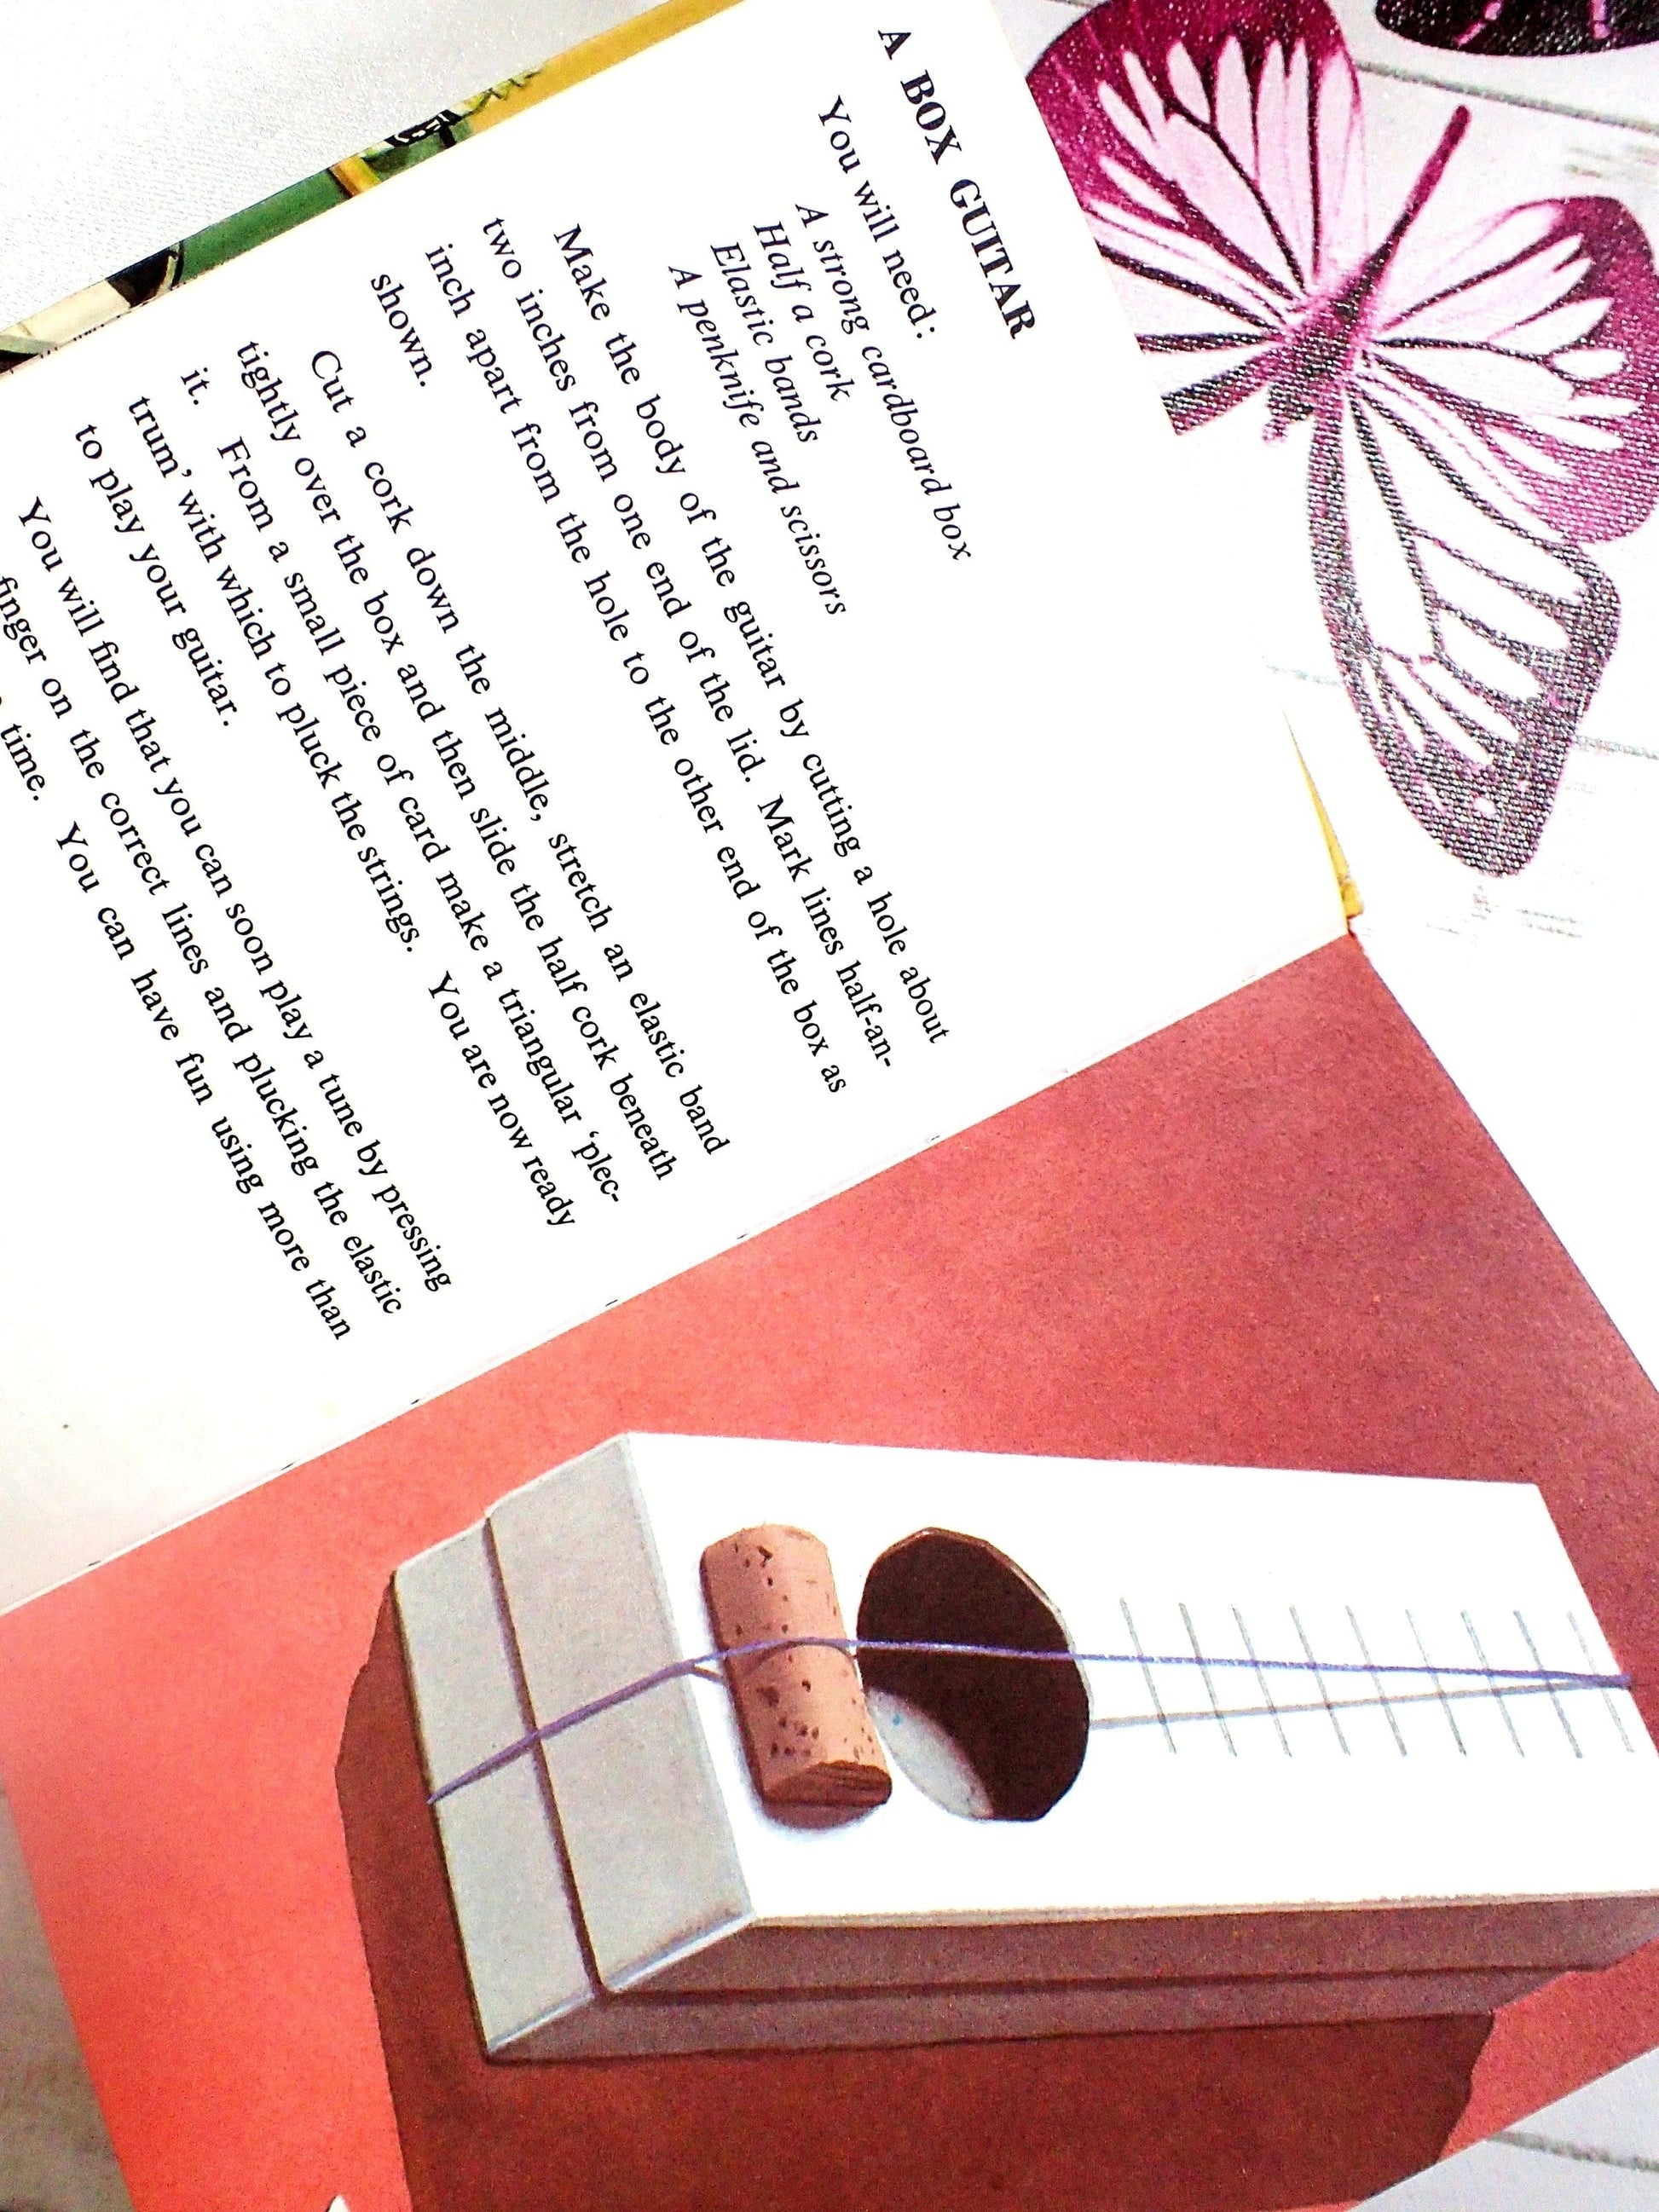 A box guitar cork and string ladybird book